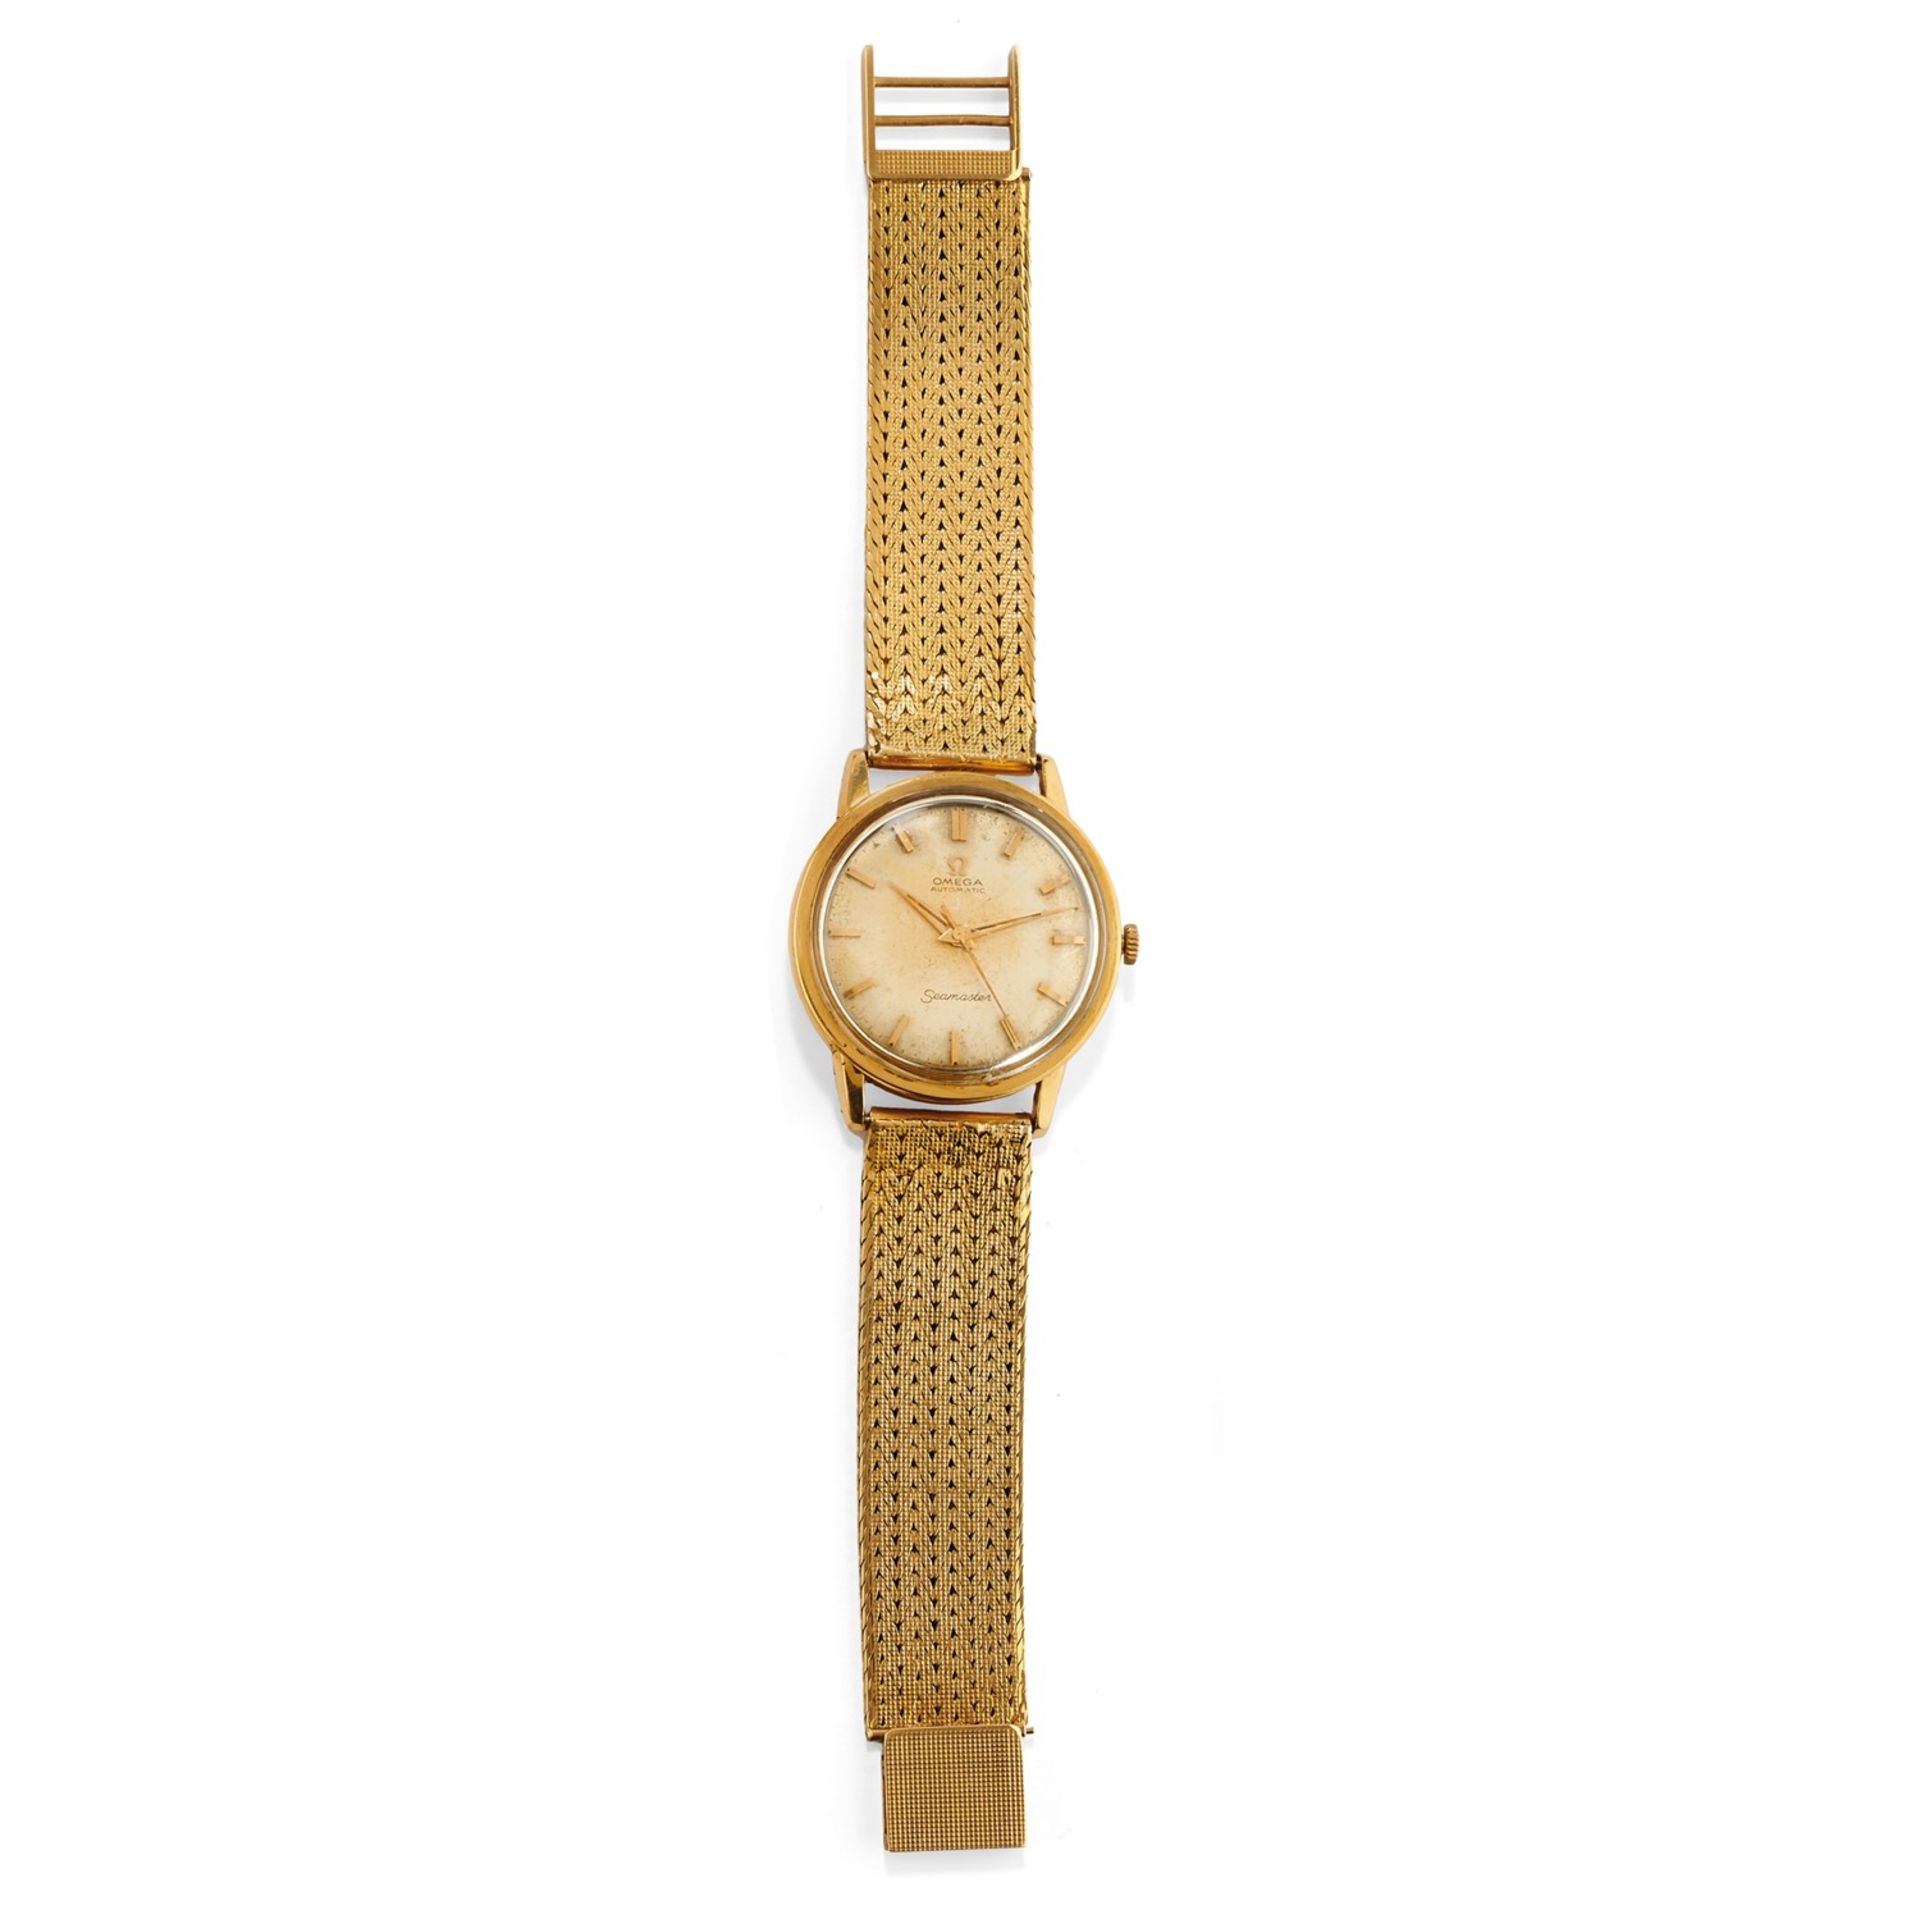 Omega - A 18K yellow gold wristwatch, Omega Seamaster - A 18K yellow gold wristwatch, [...]